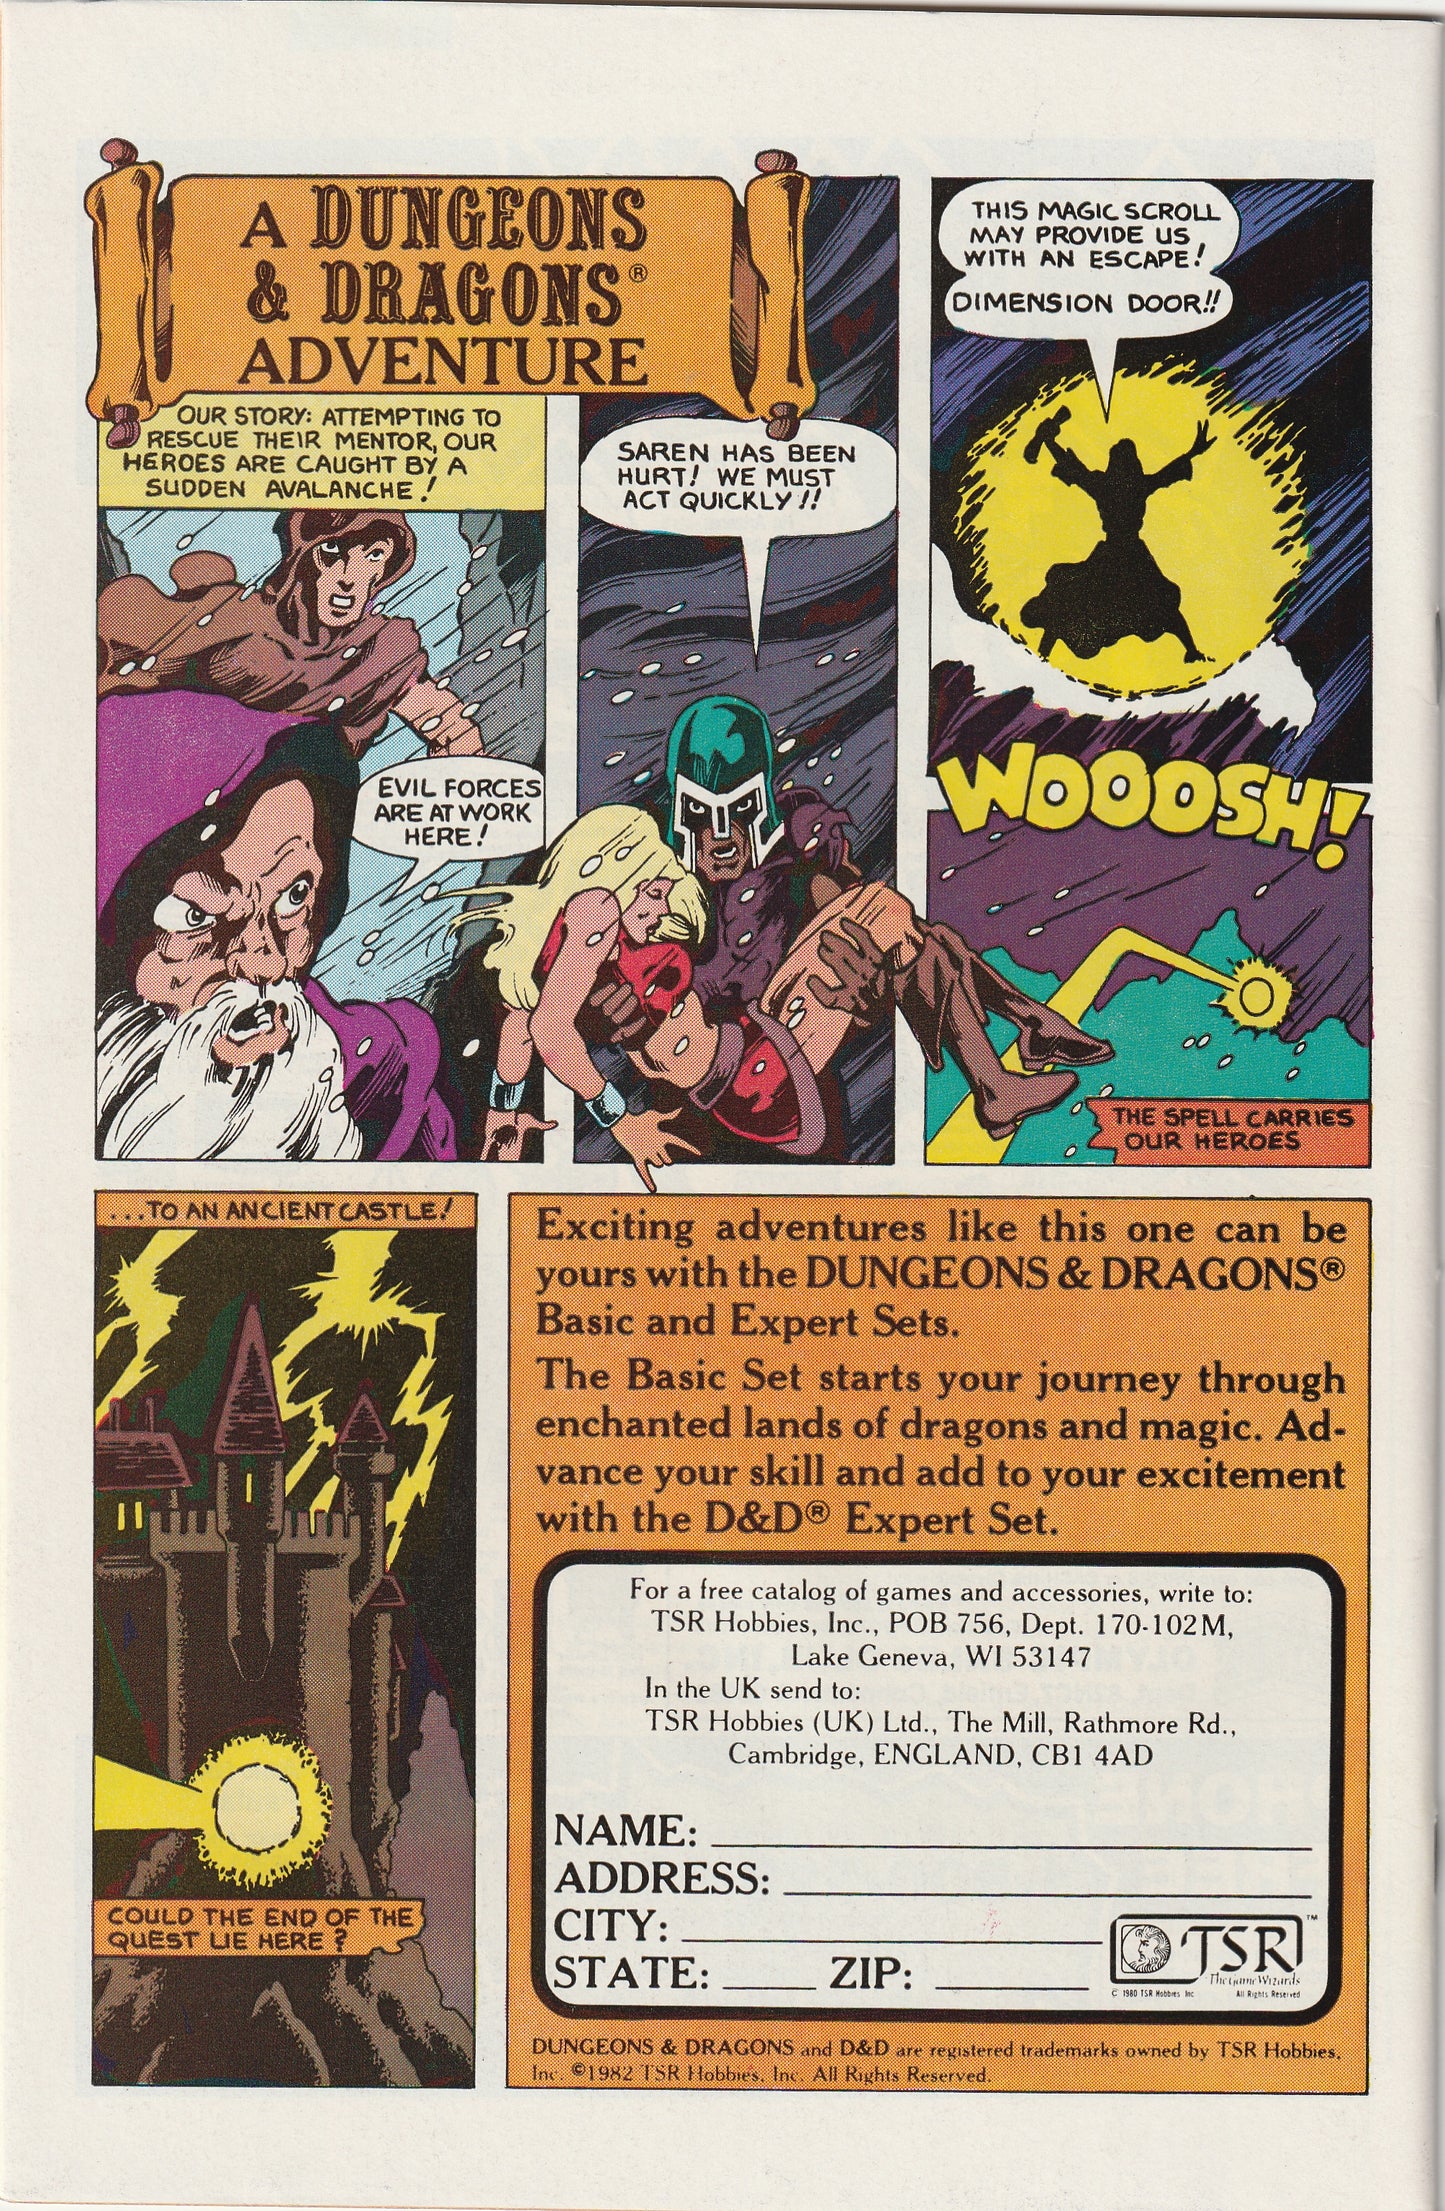 Brave and the Bold #191 (1982) - Batman & The Joker